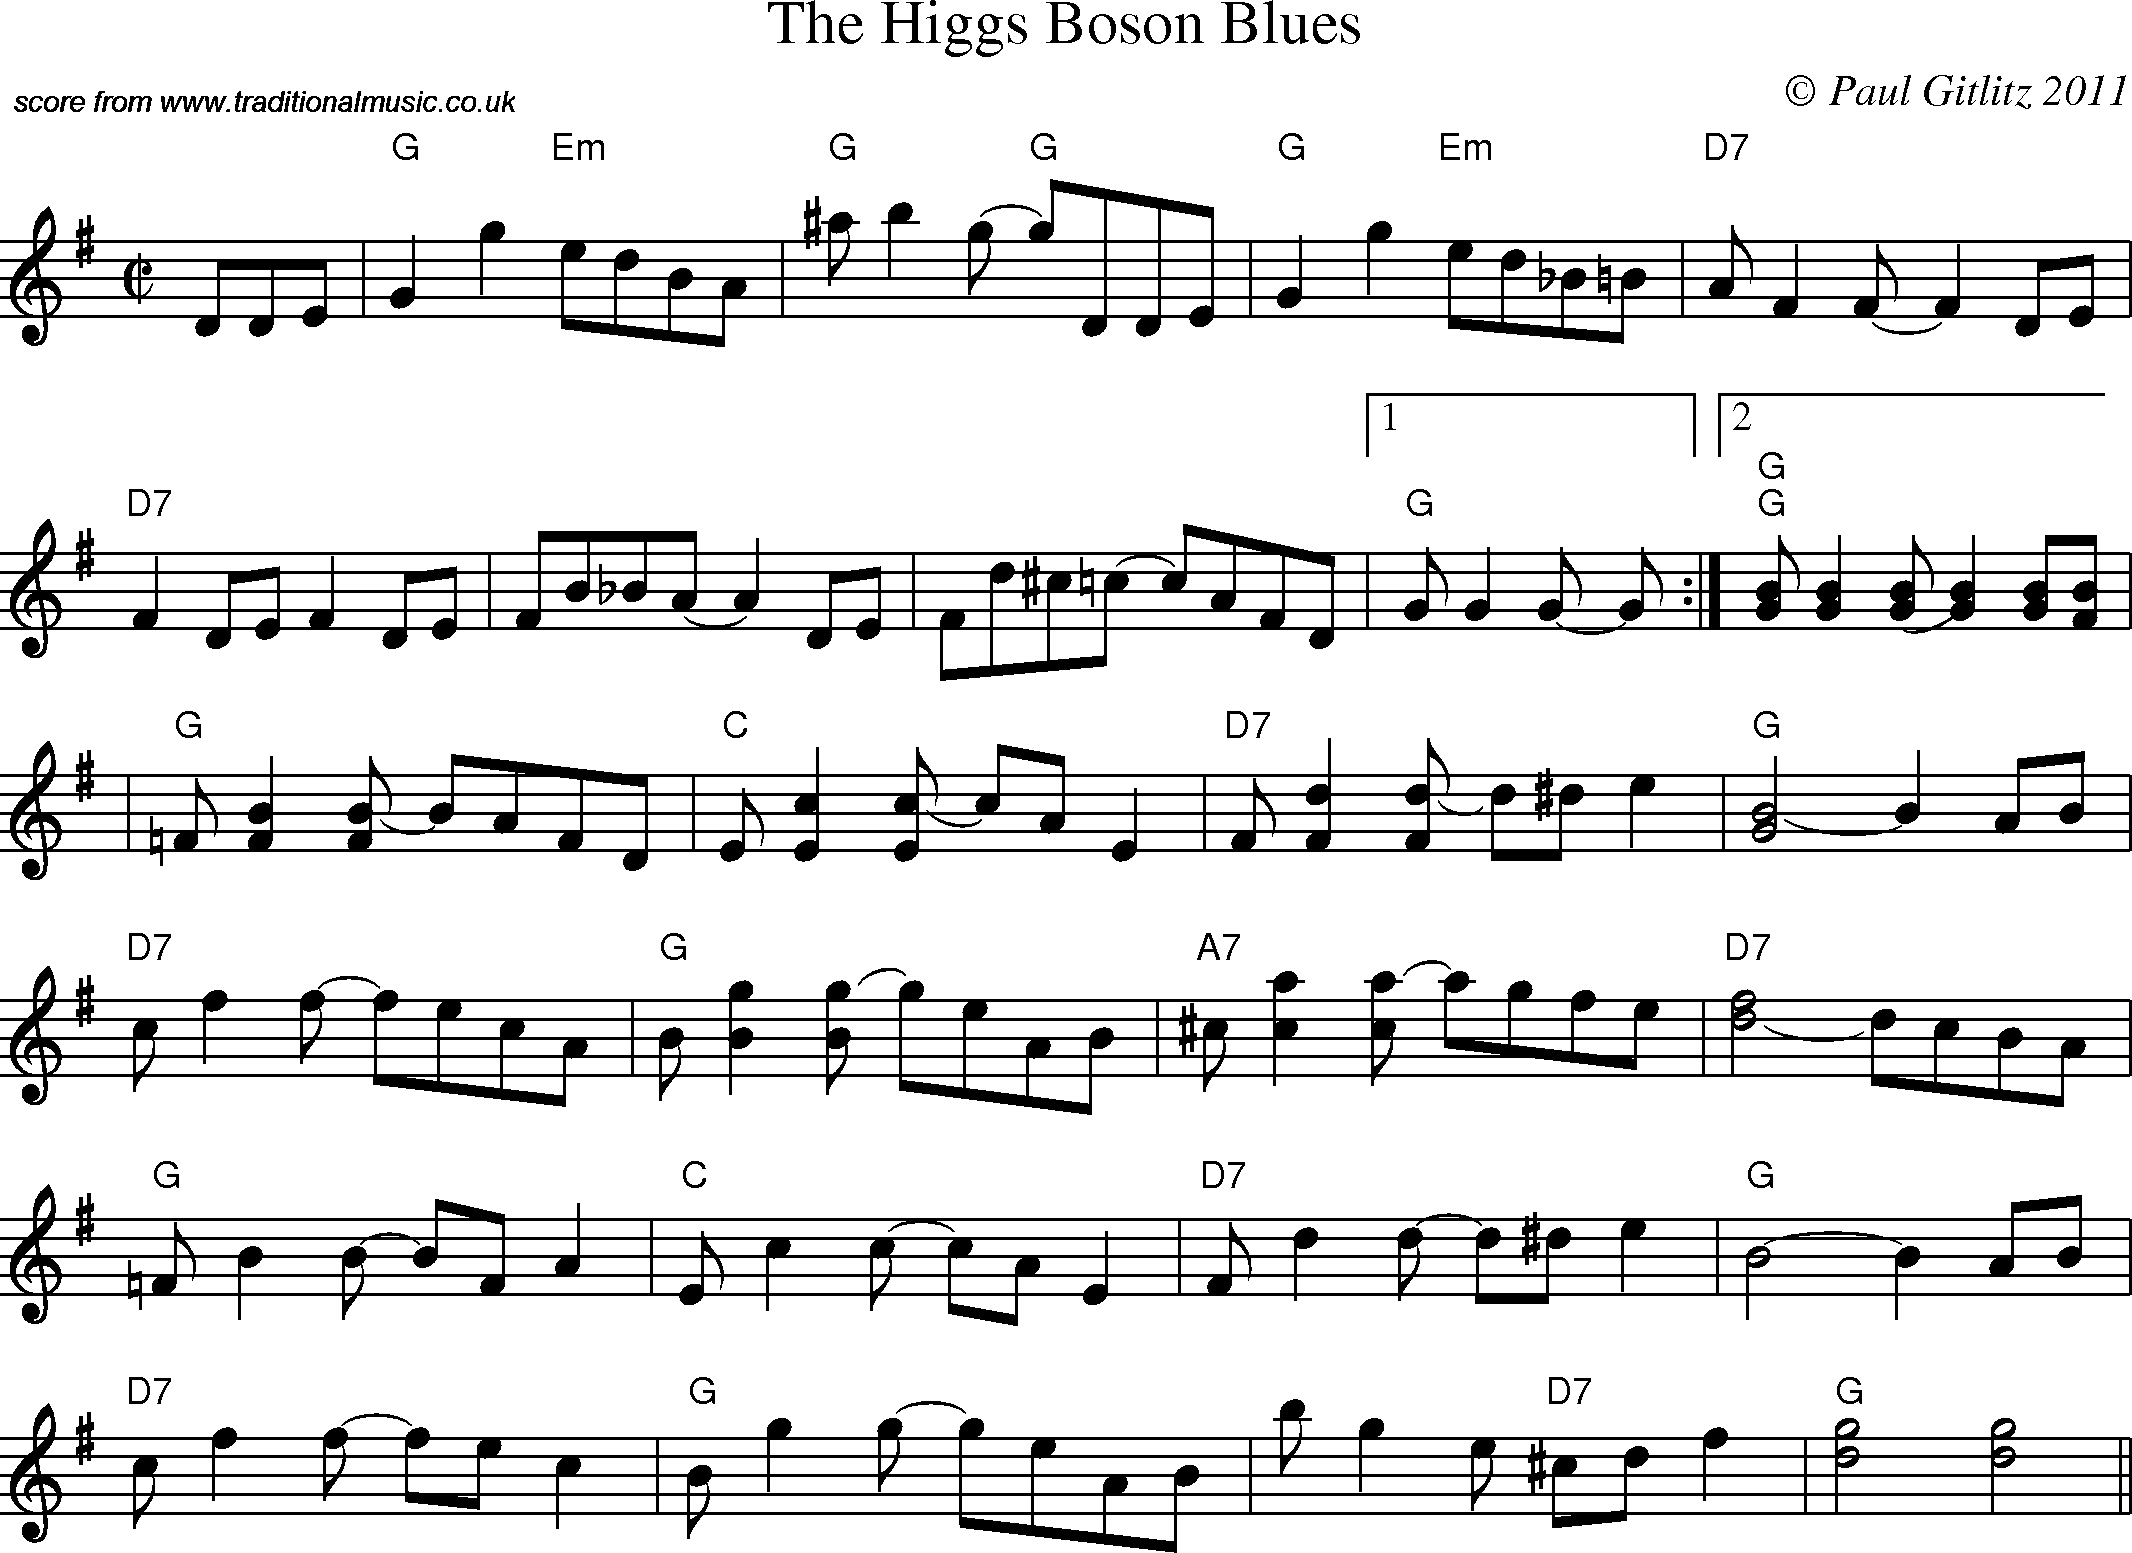 Sheet Music Score for Reel - Higgs Boson Blues, The